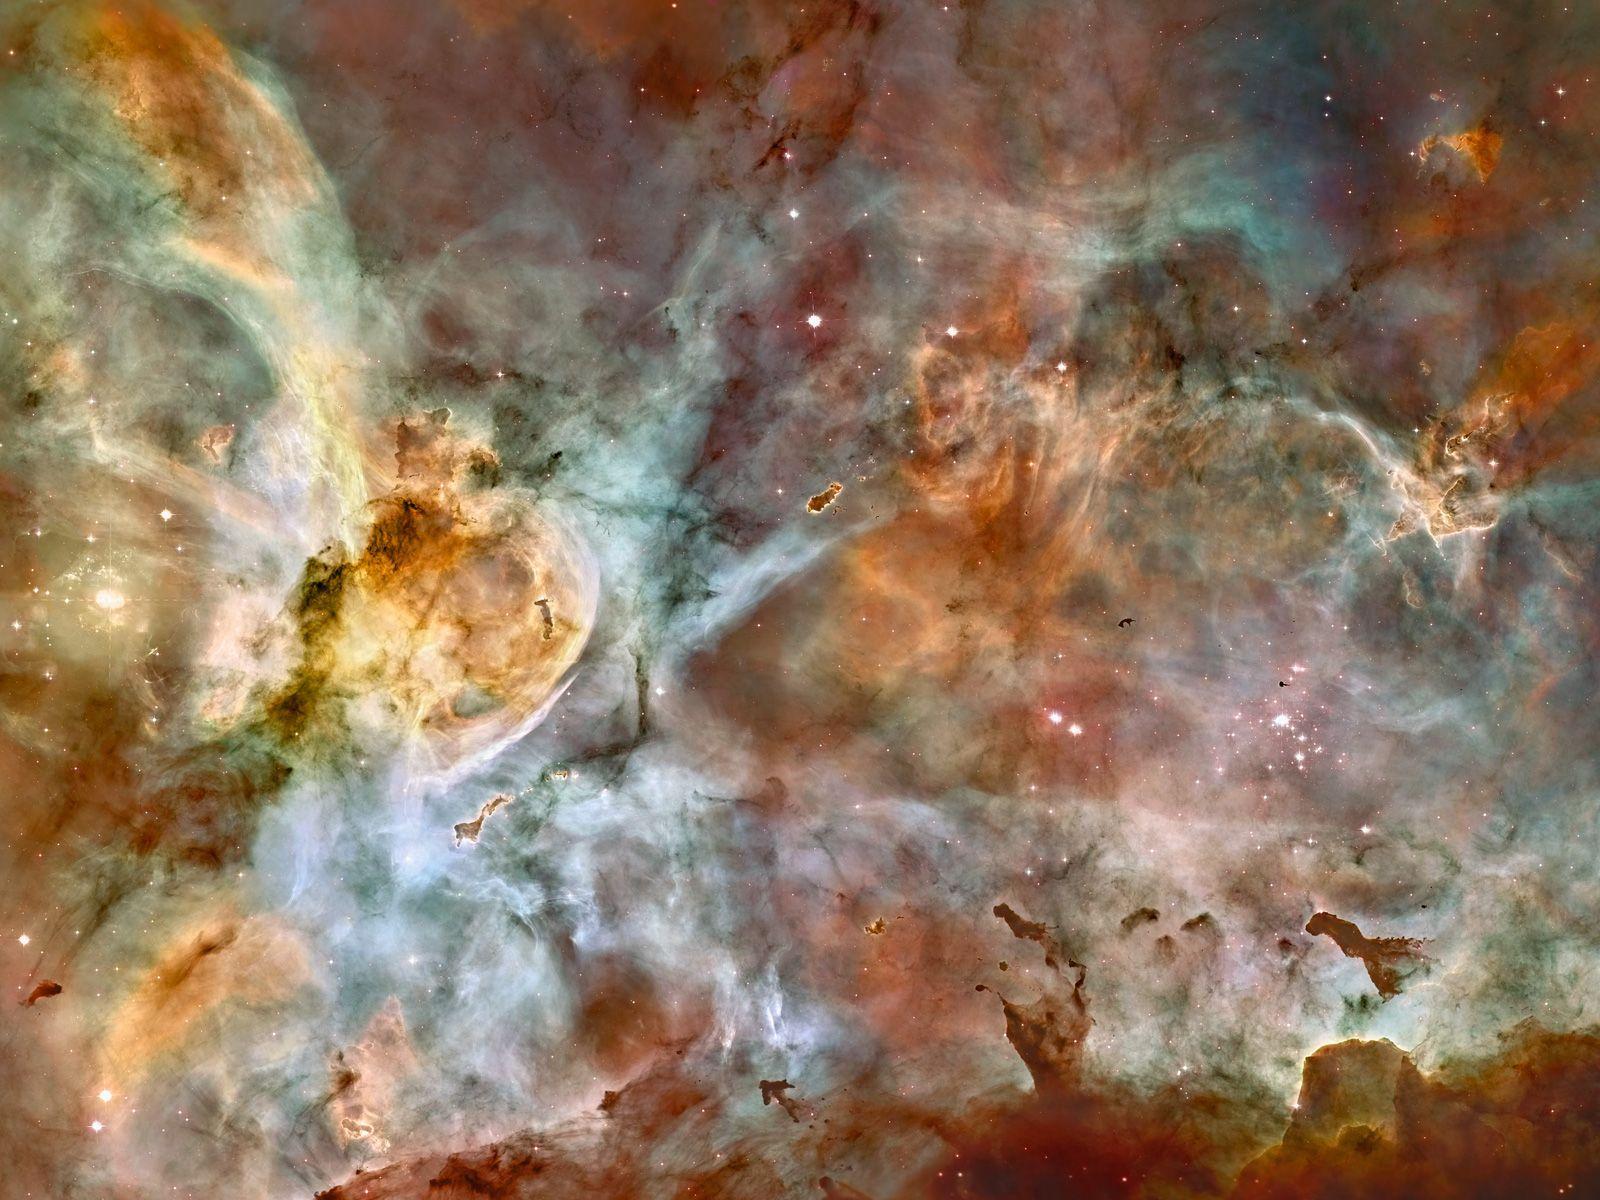 Hubble Telescope Wallpaper iPhone: Wallpaper Hubble Us. .Ssofc